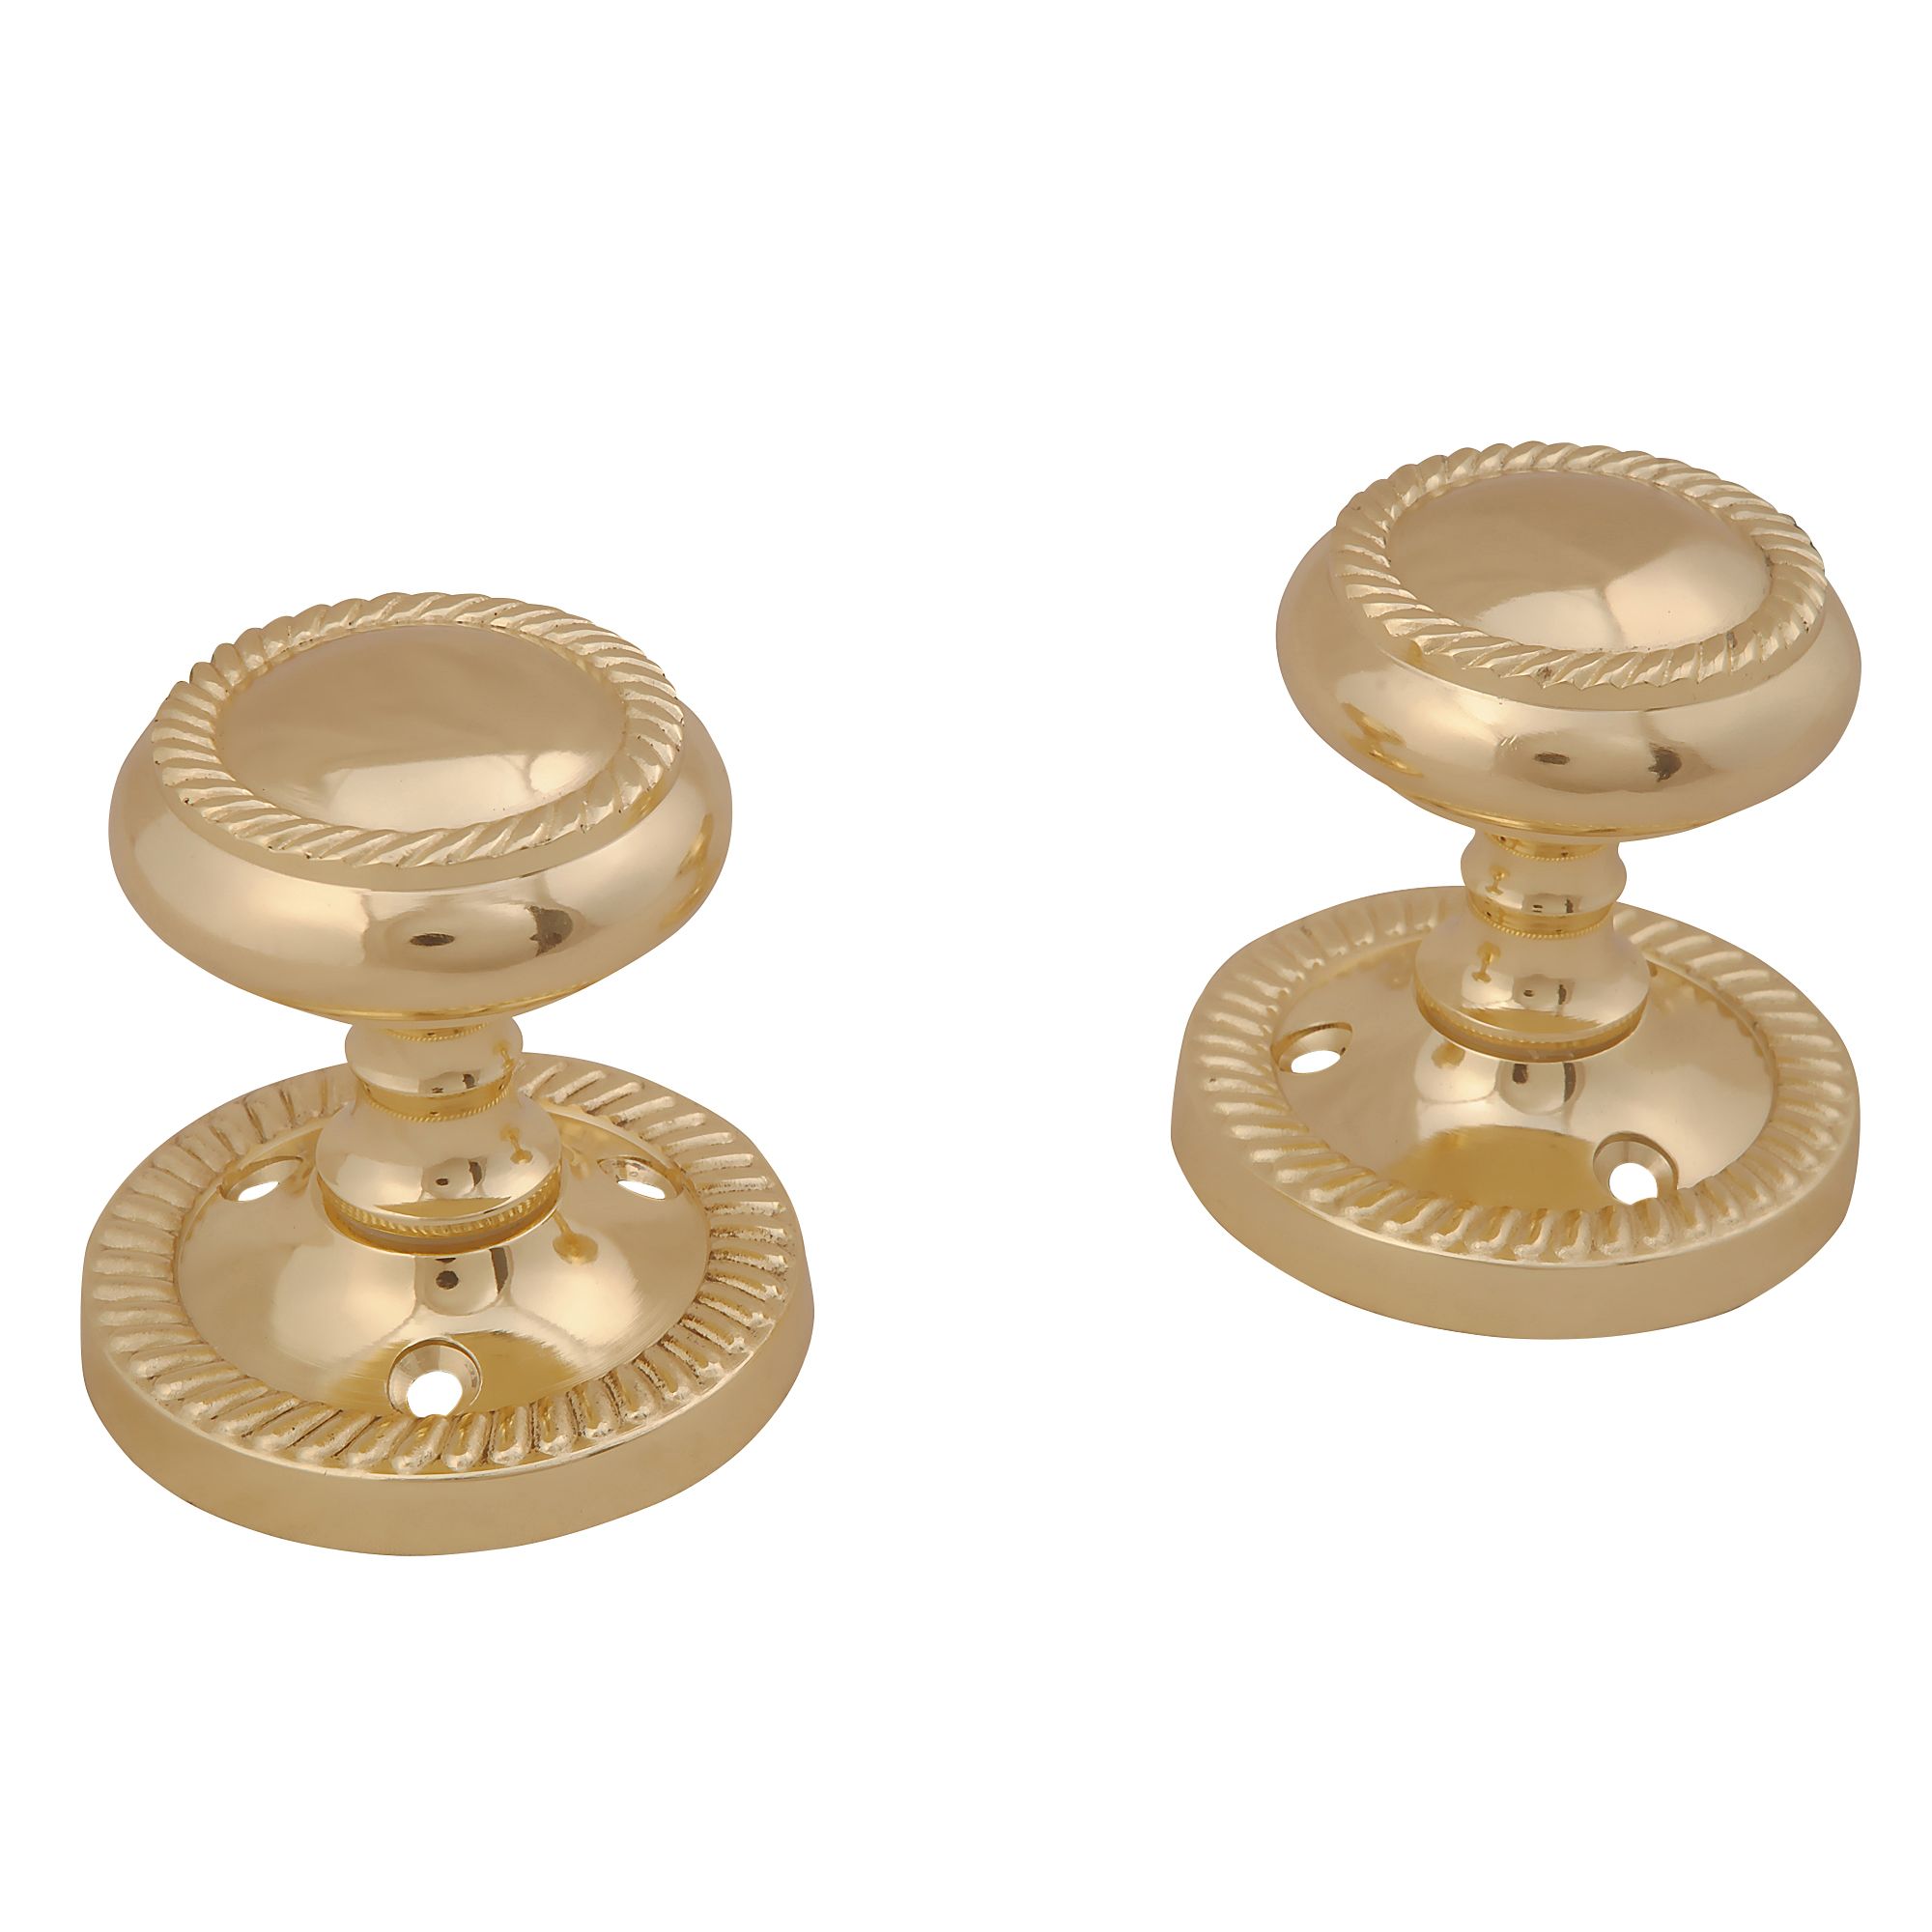 Polished Brass effect Zamac Round Door knob (Dia)53mm, Pair